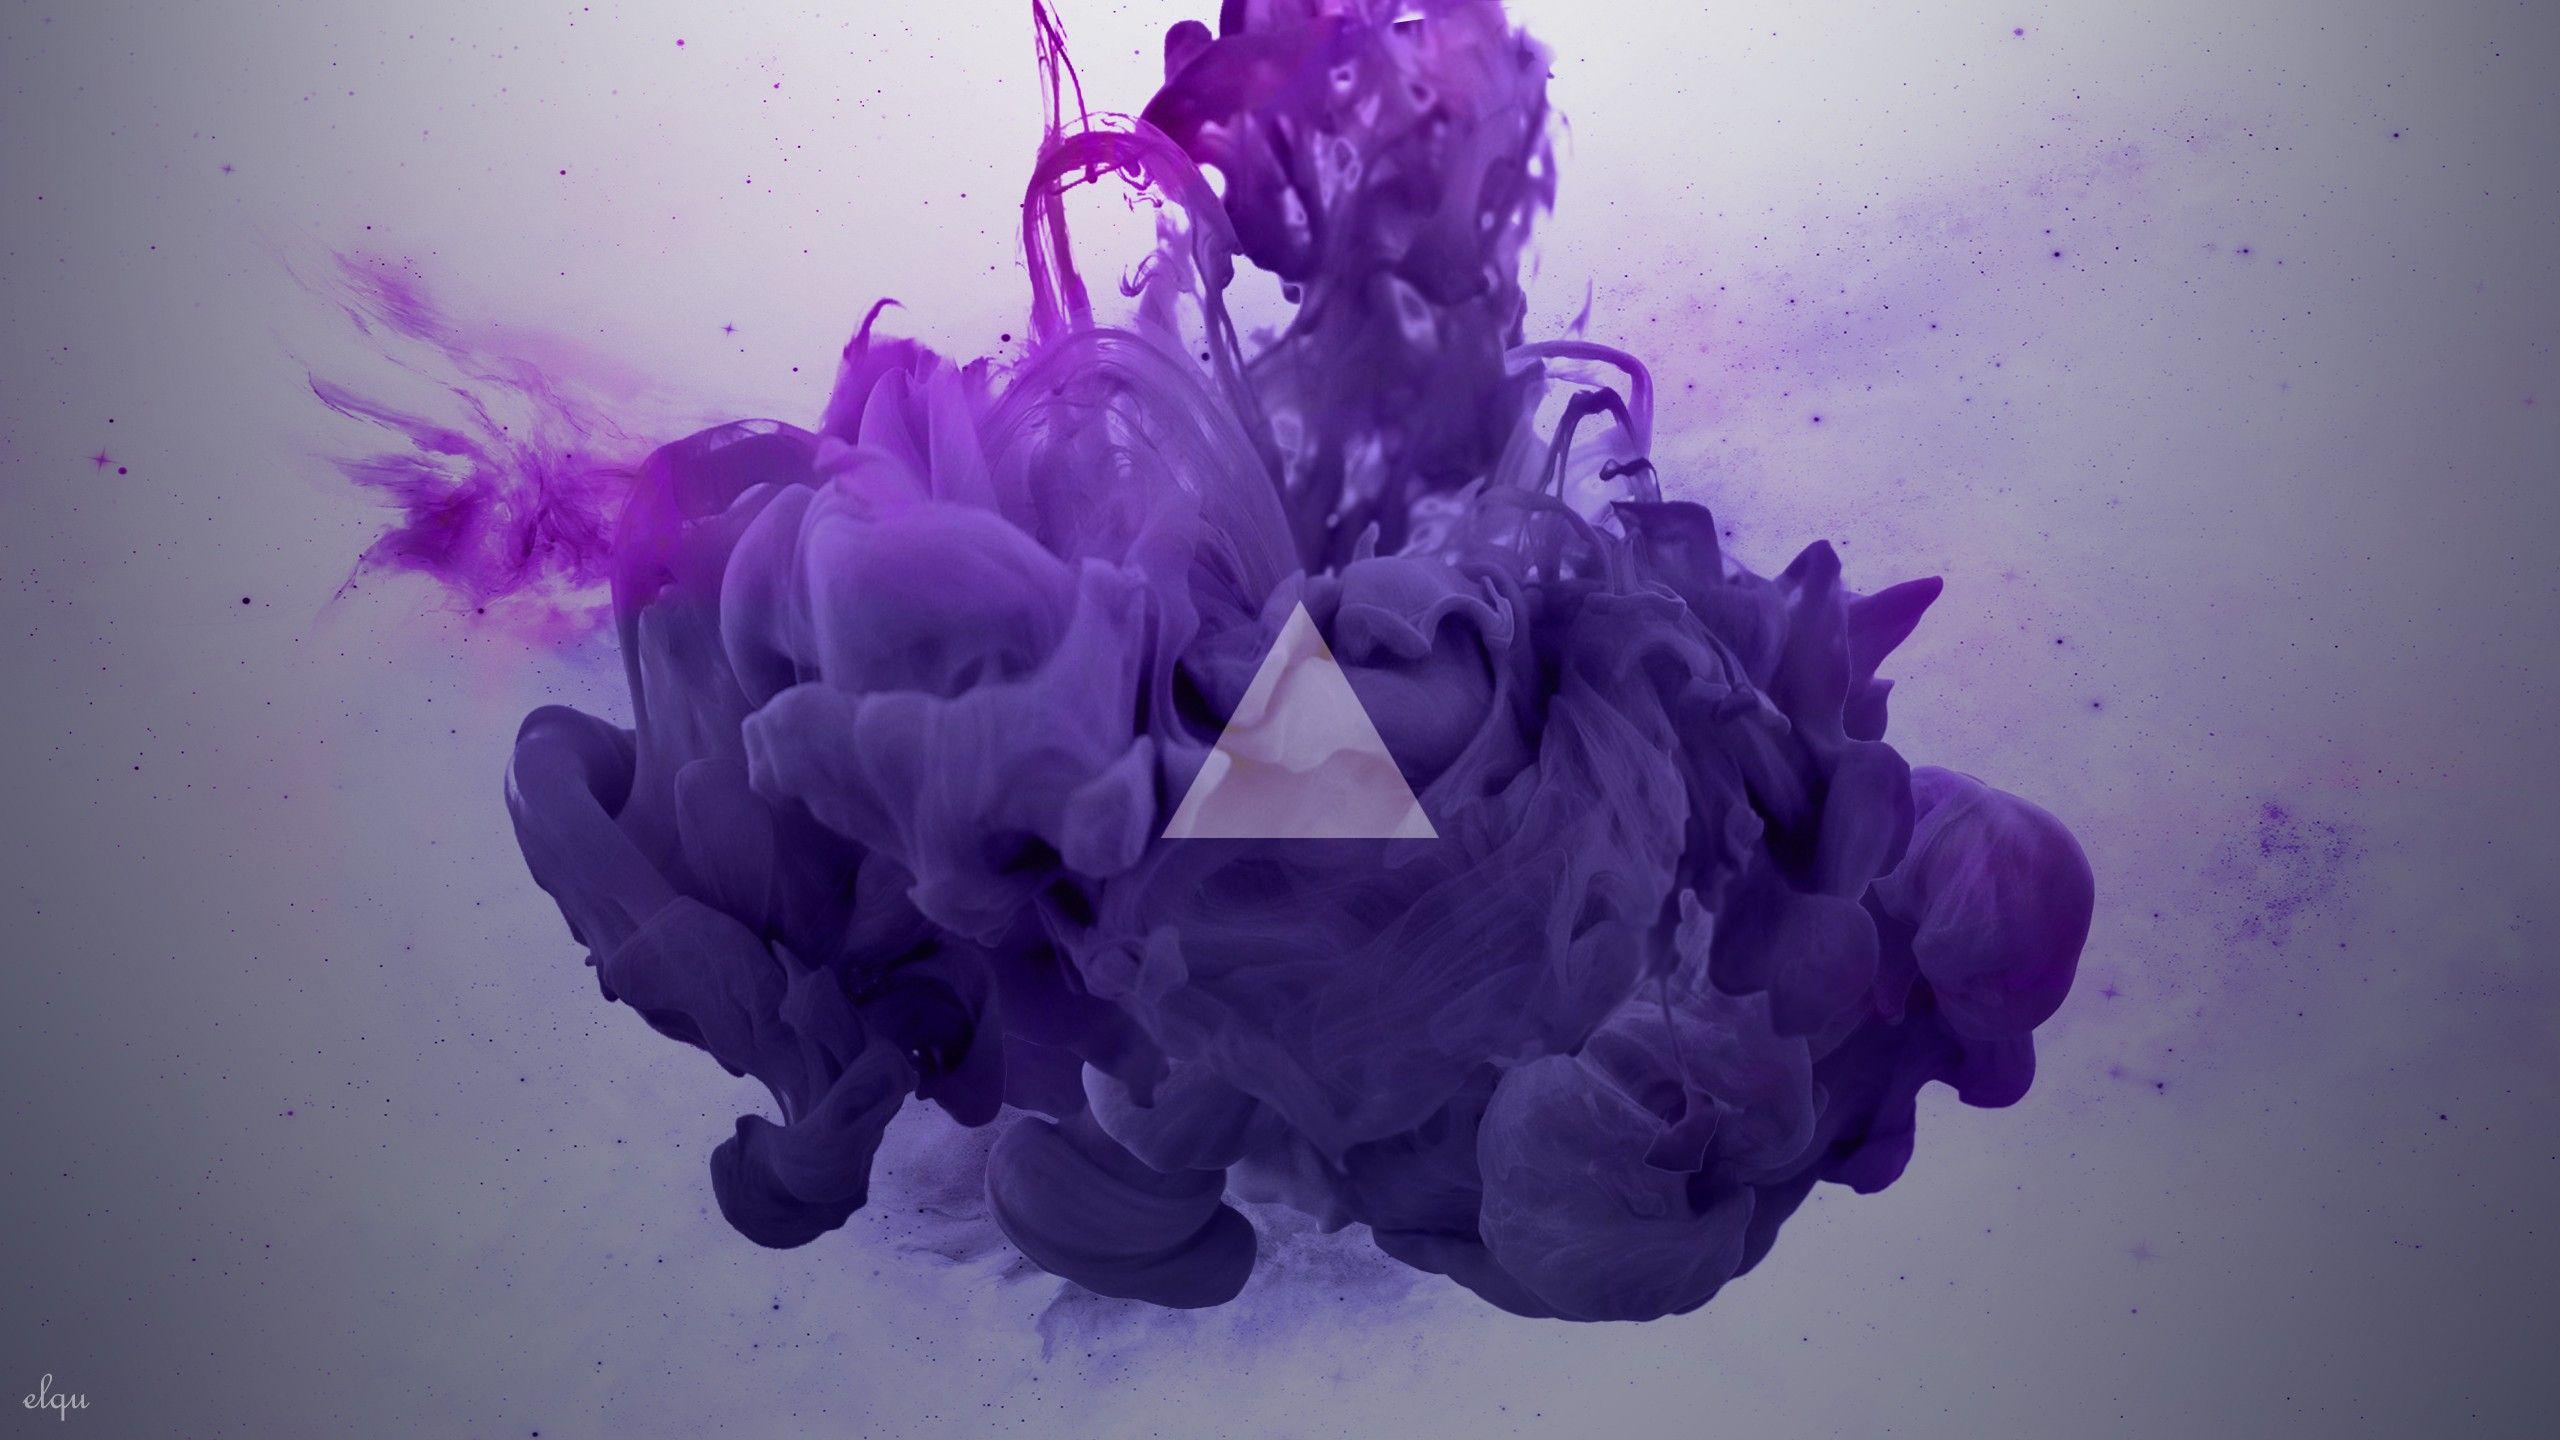 General 2560x1440 ink smoke abstract digital art purple